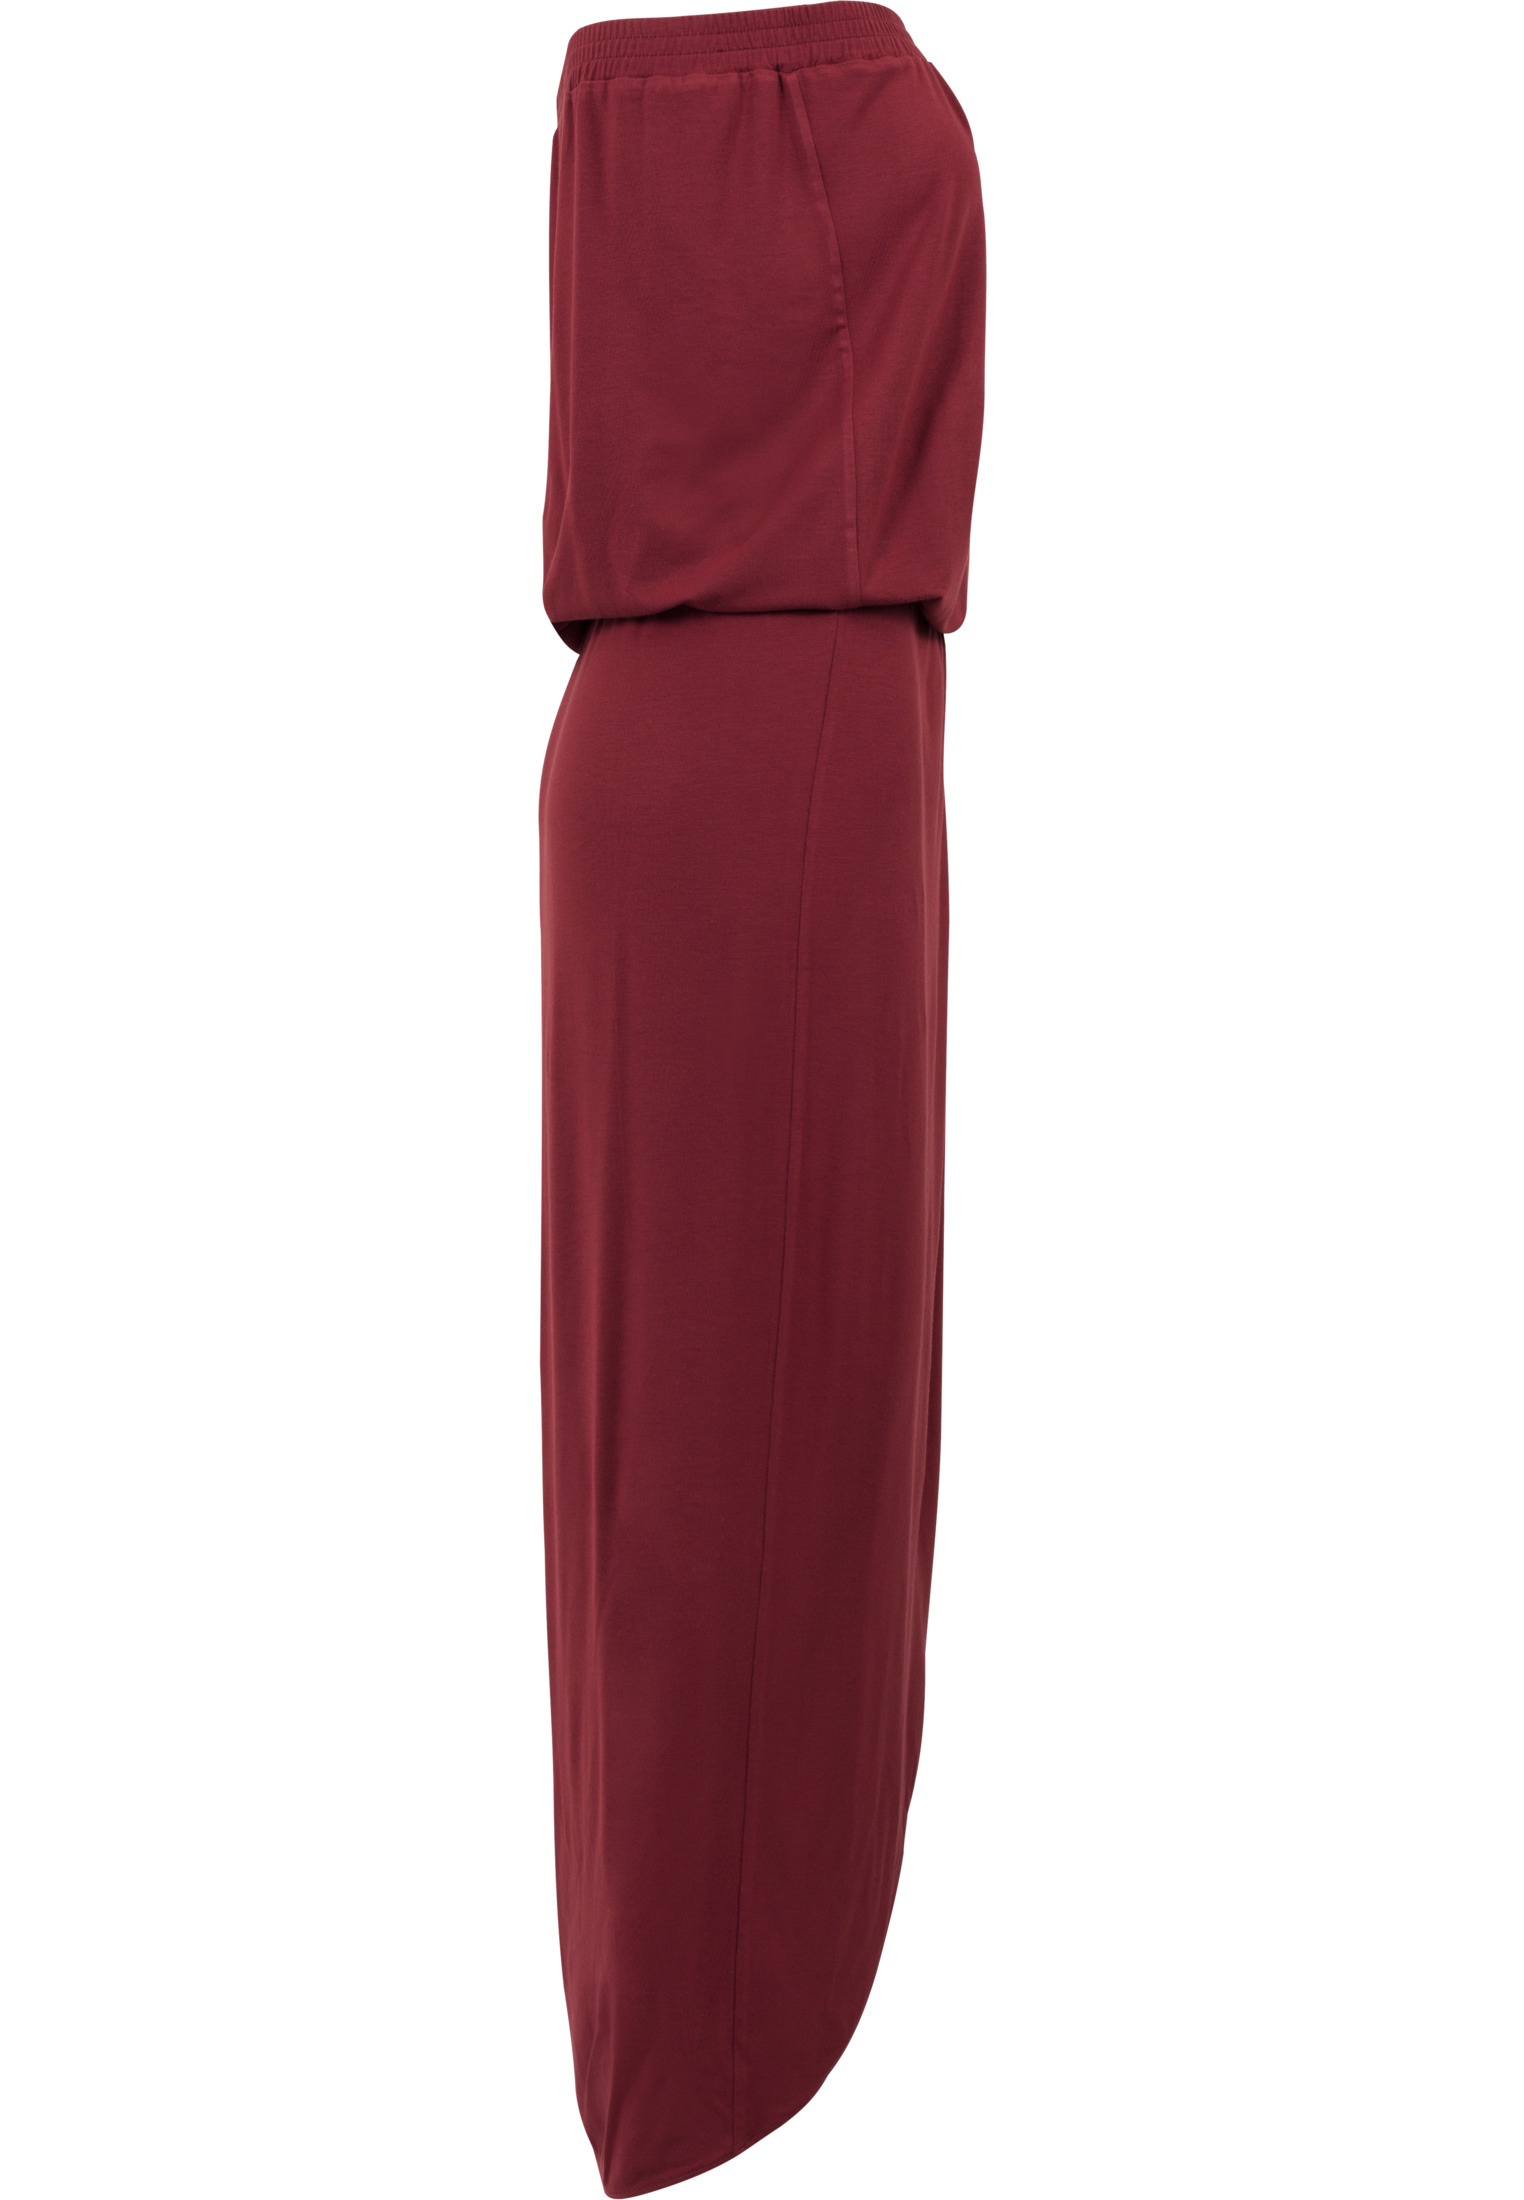 Kleider & R?cke Ladies Viscose Bandeau Dress in Farbe burgundy